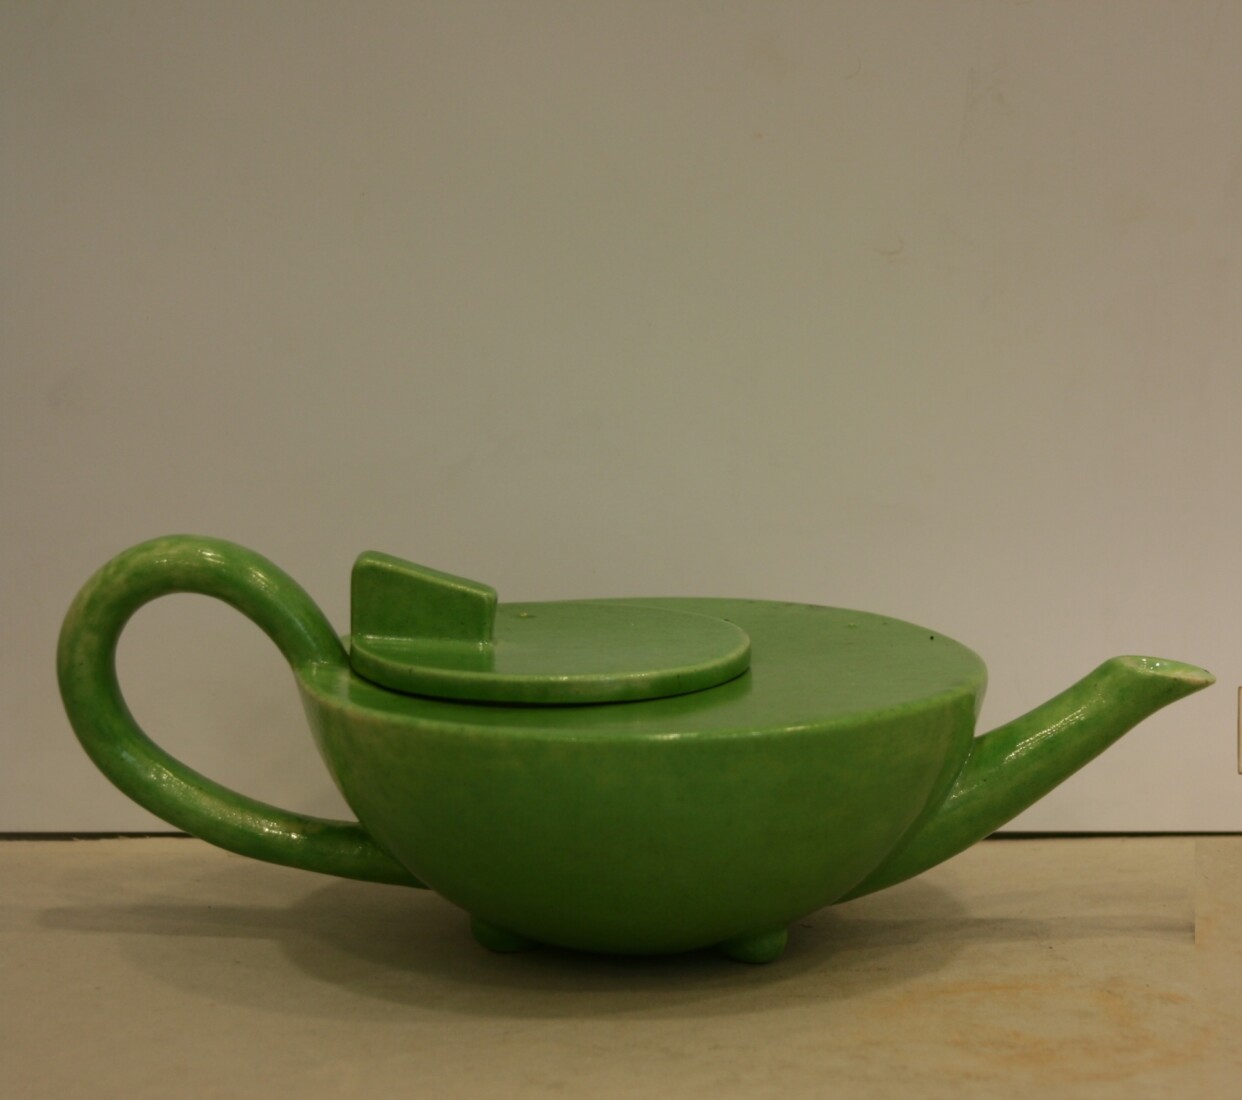 Ceramic teapot with green glazing